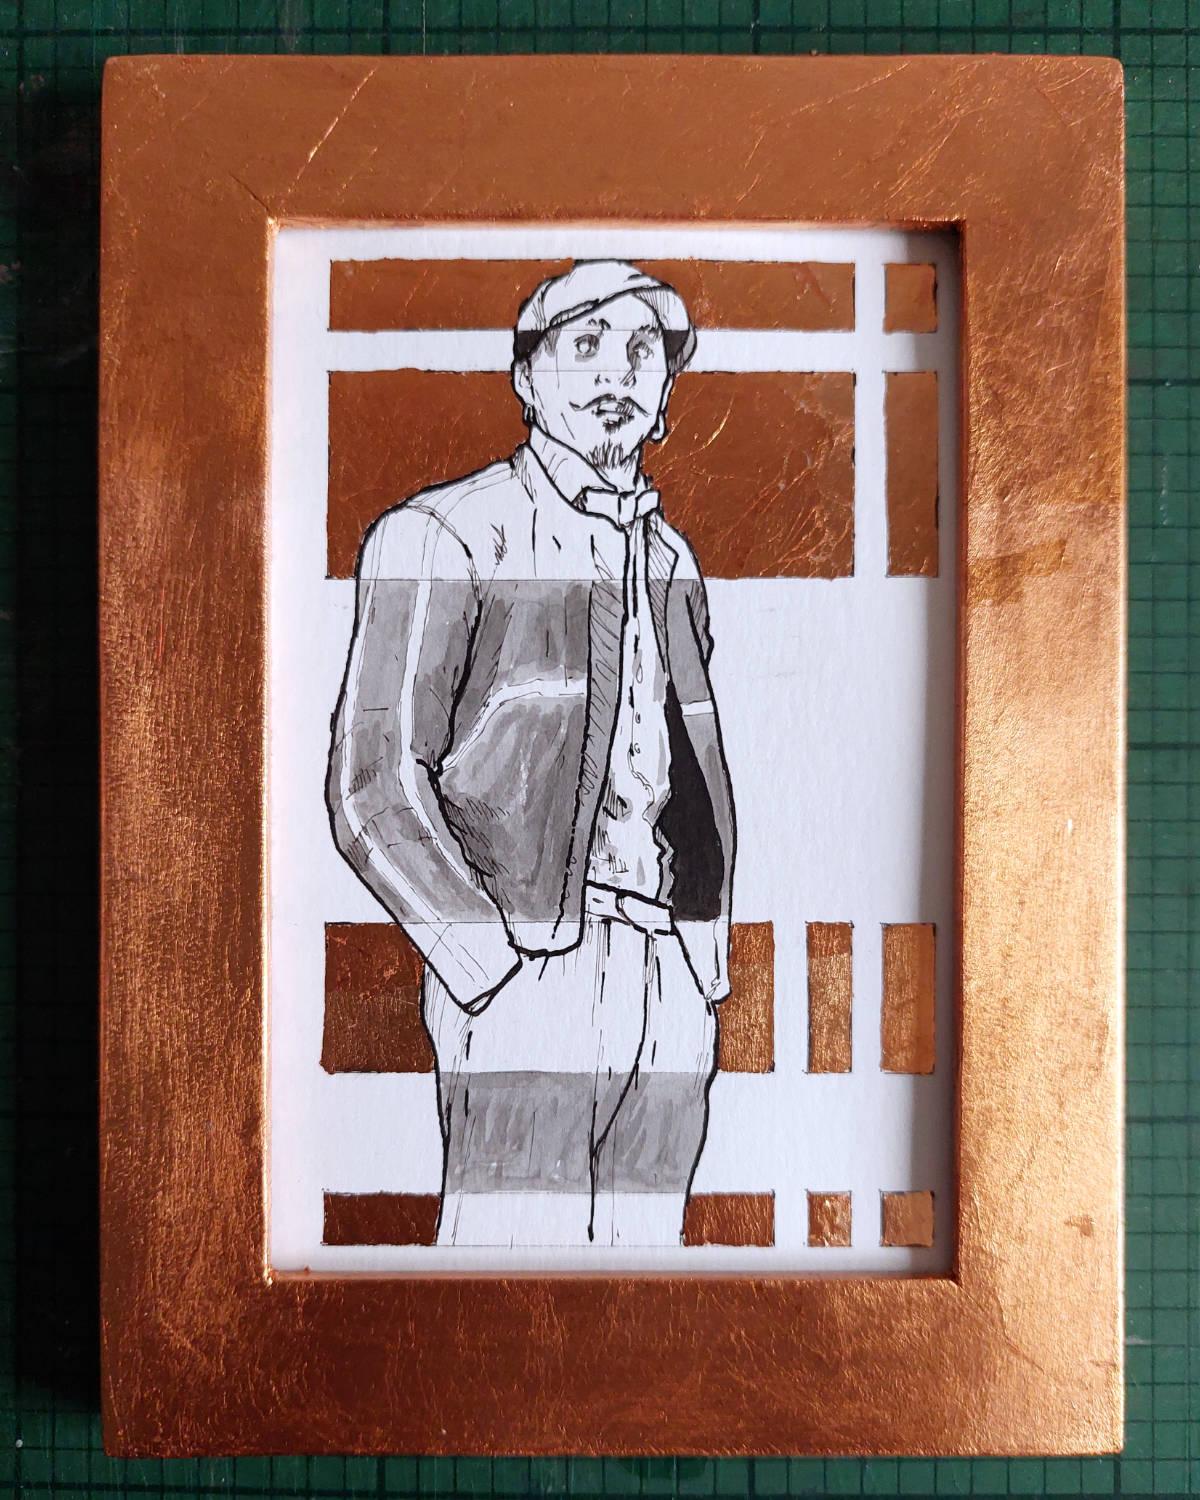 Ink + Copper Leaf on Paper and Frame 8x11 cm.